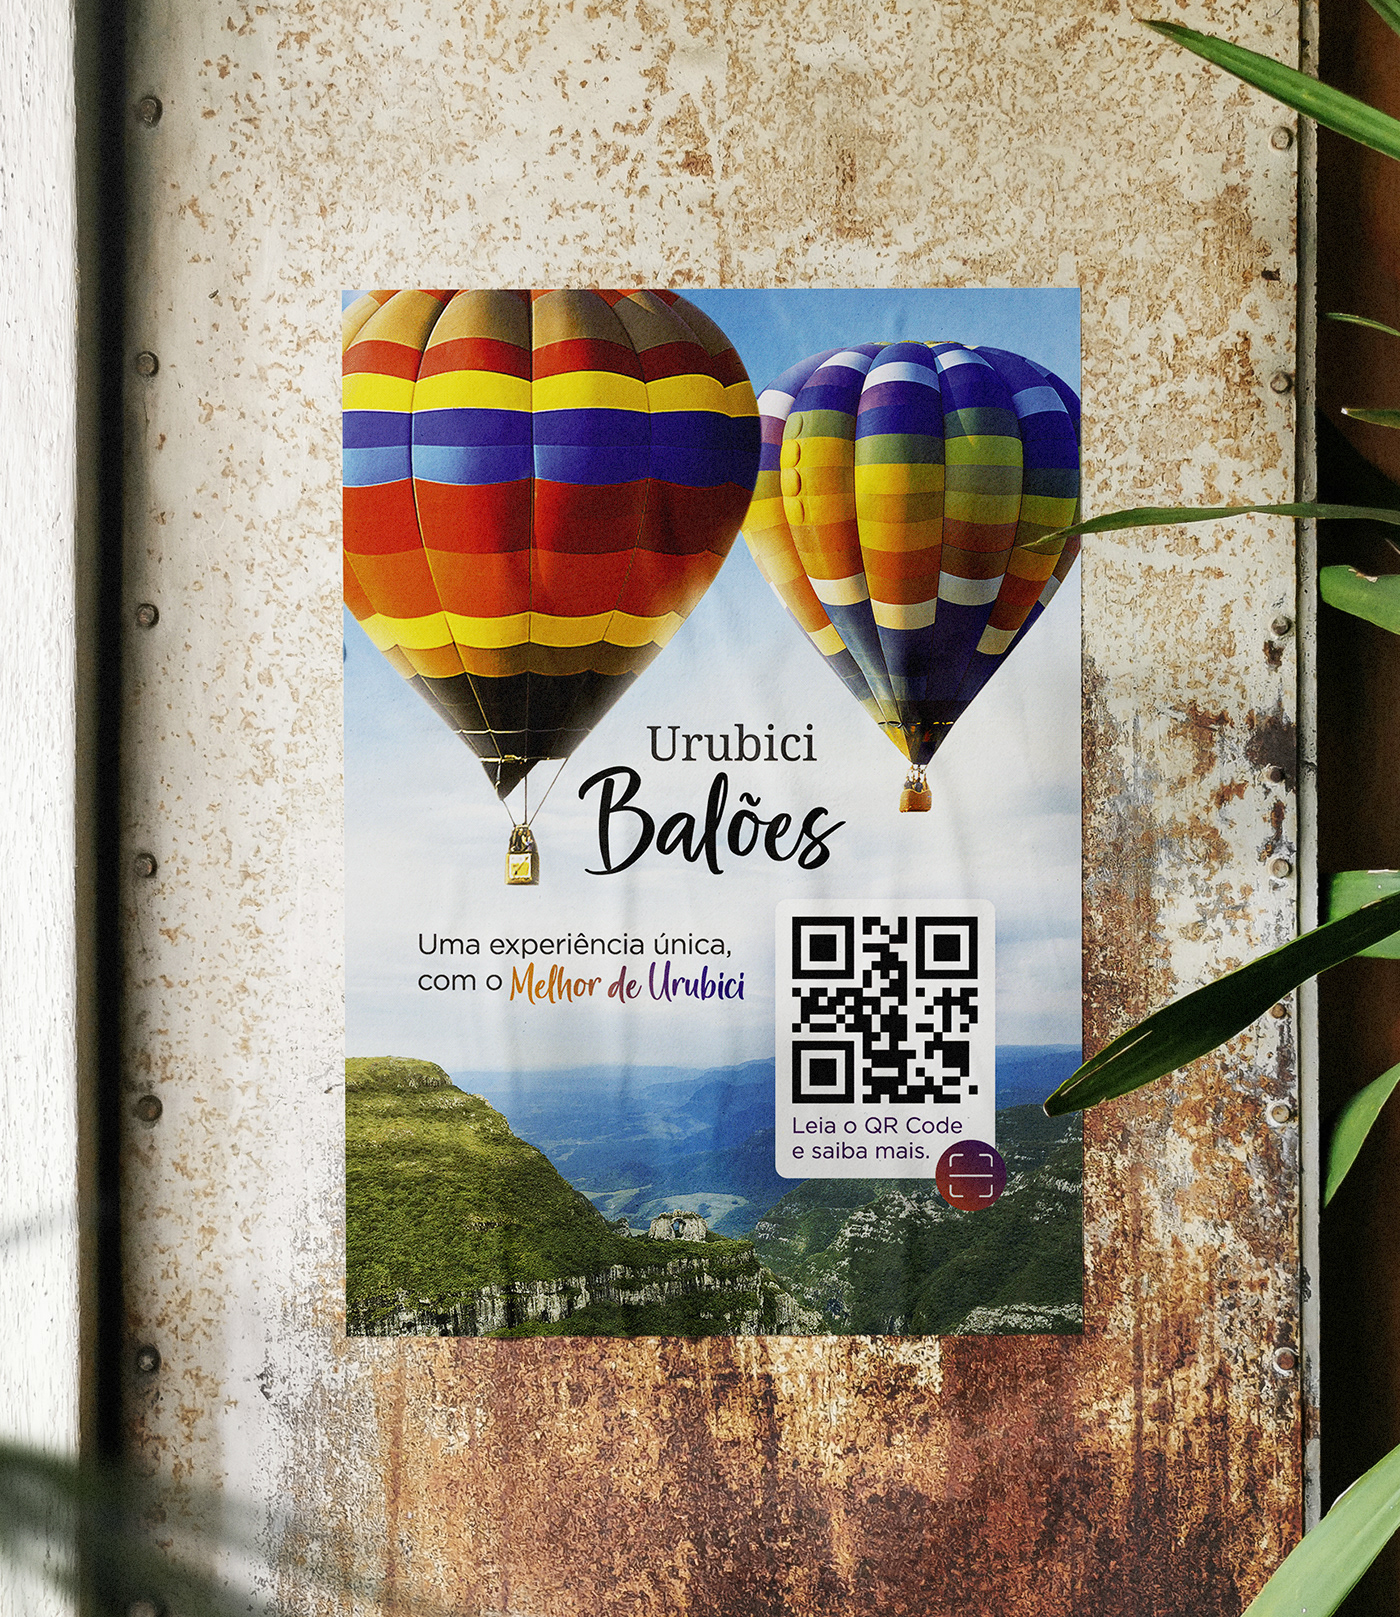 balões flyer Santa Catarina Urubici Balonismo balloon adventure tourism